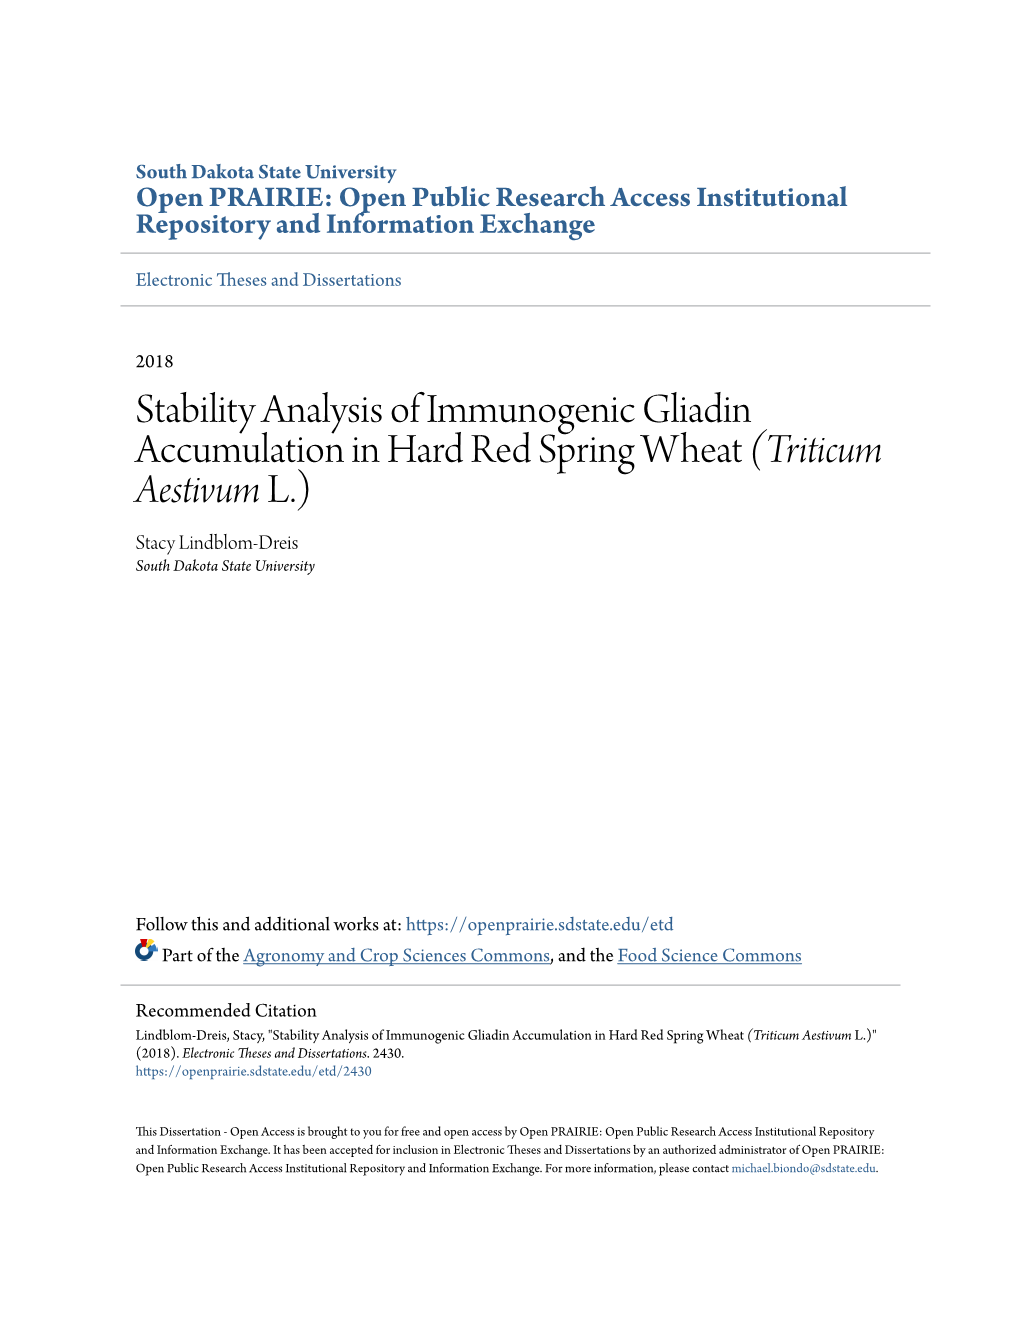 Stability Analysis of Immunogenic Gliadin Accumulation in Hard Red Spring Wheat (Triticum Aestivum L.) Stacy Lindblom-Dreis South Dakota State University